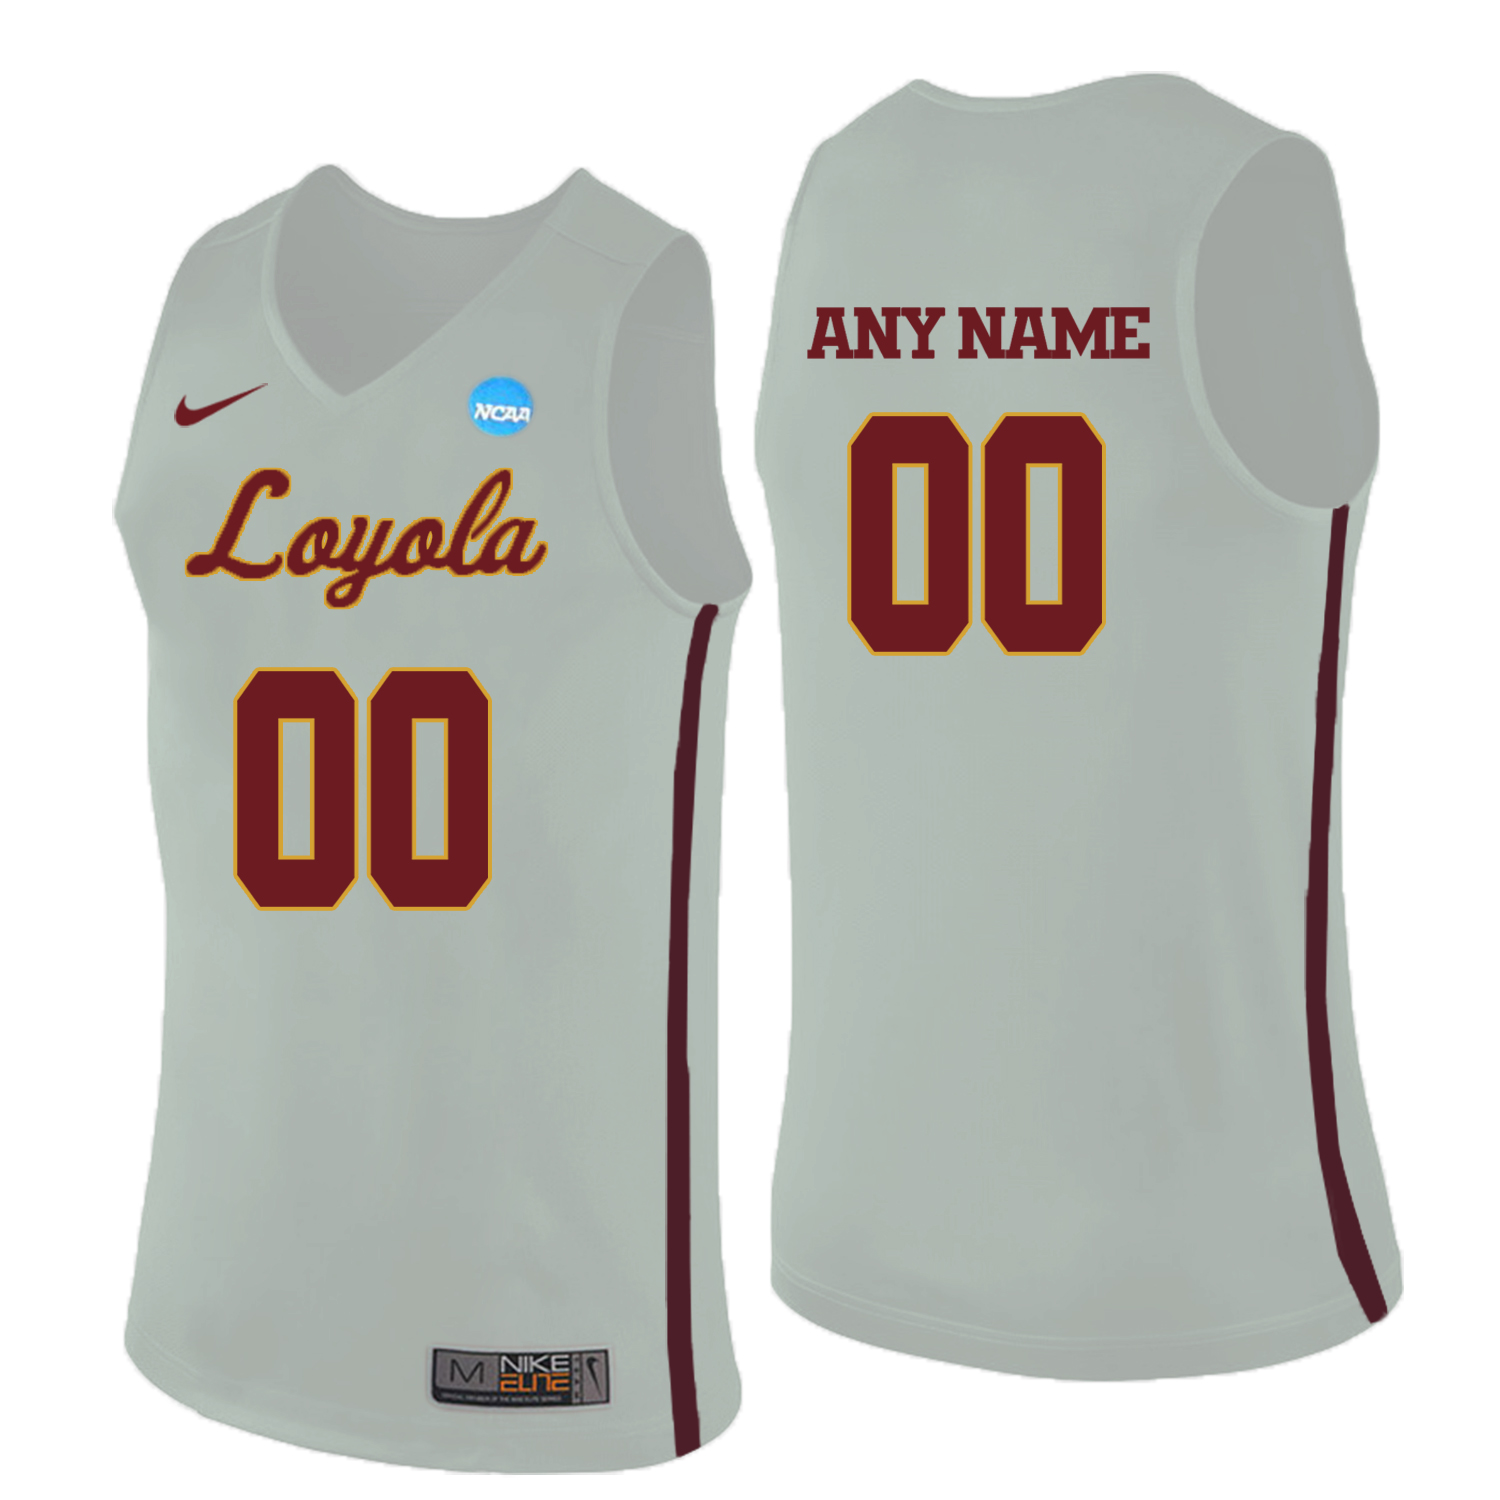 Loyola (Chi) Ramblers White Men's Customized College Basketball Jersey